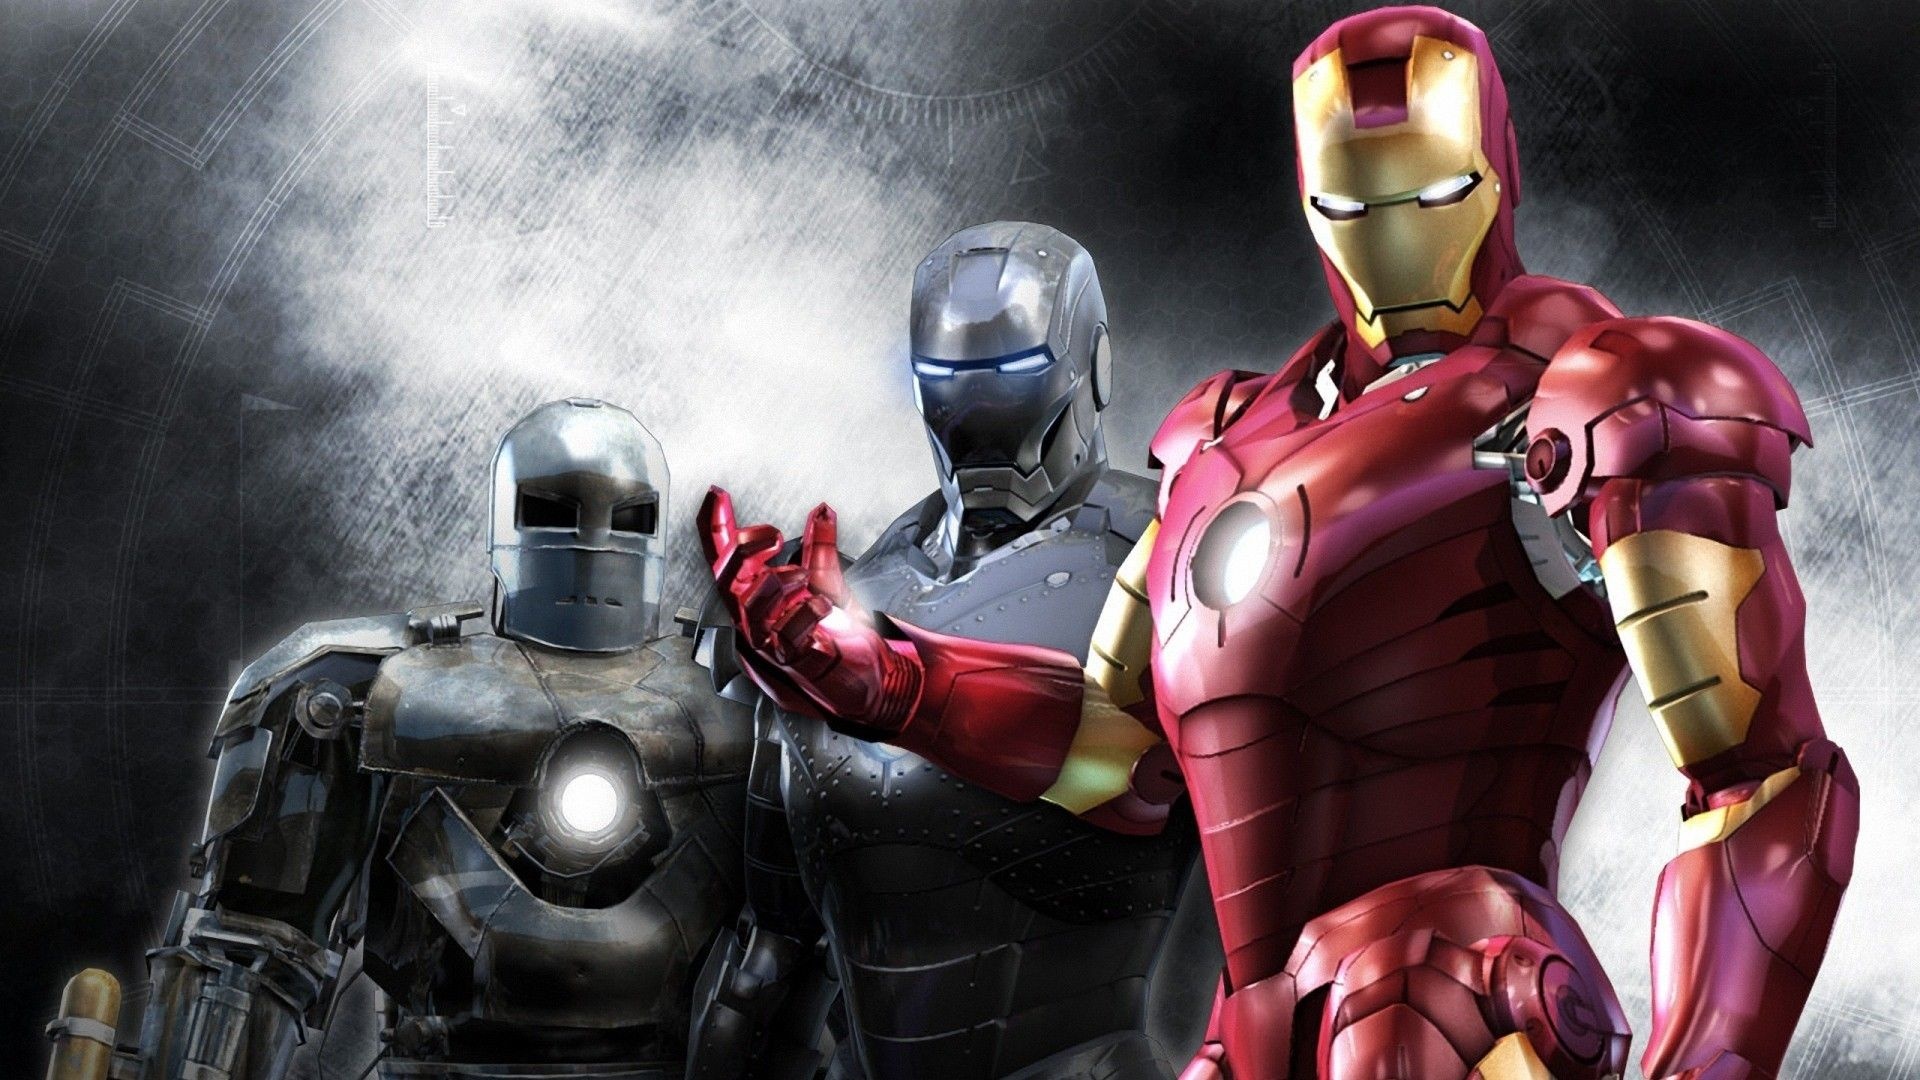 Iron Man suit, iron man 3, desktop wallpapers, 1920x1080 Full HD Desktop